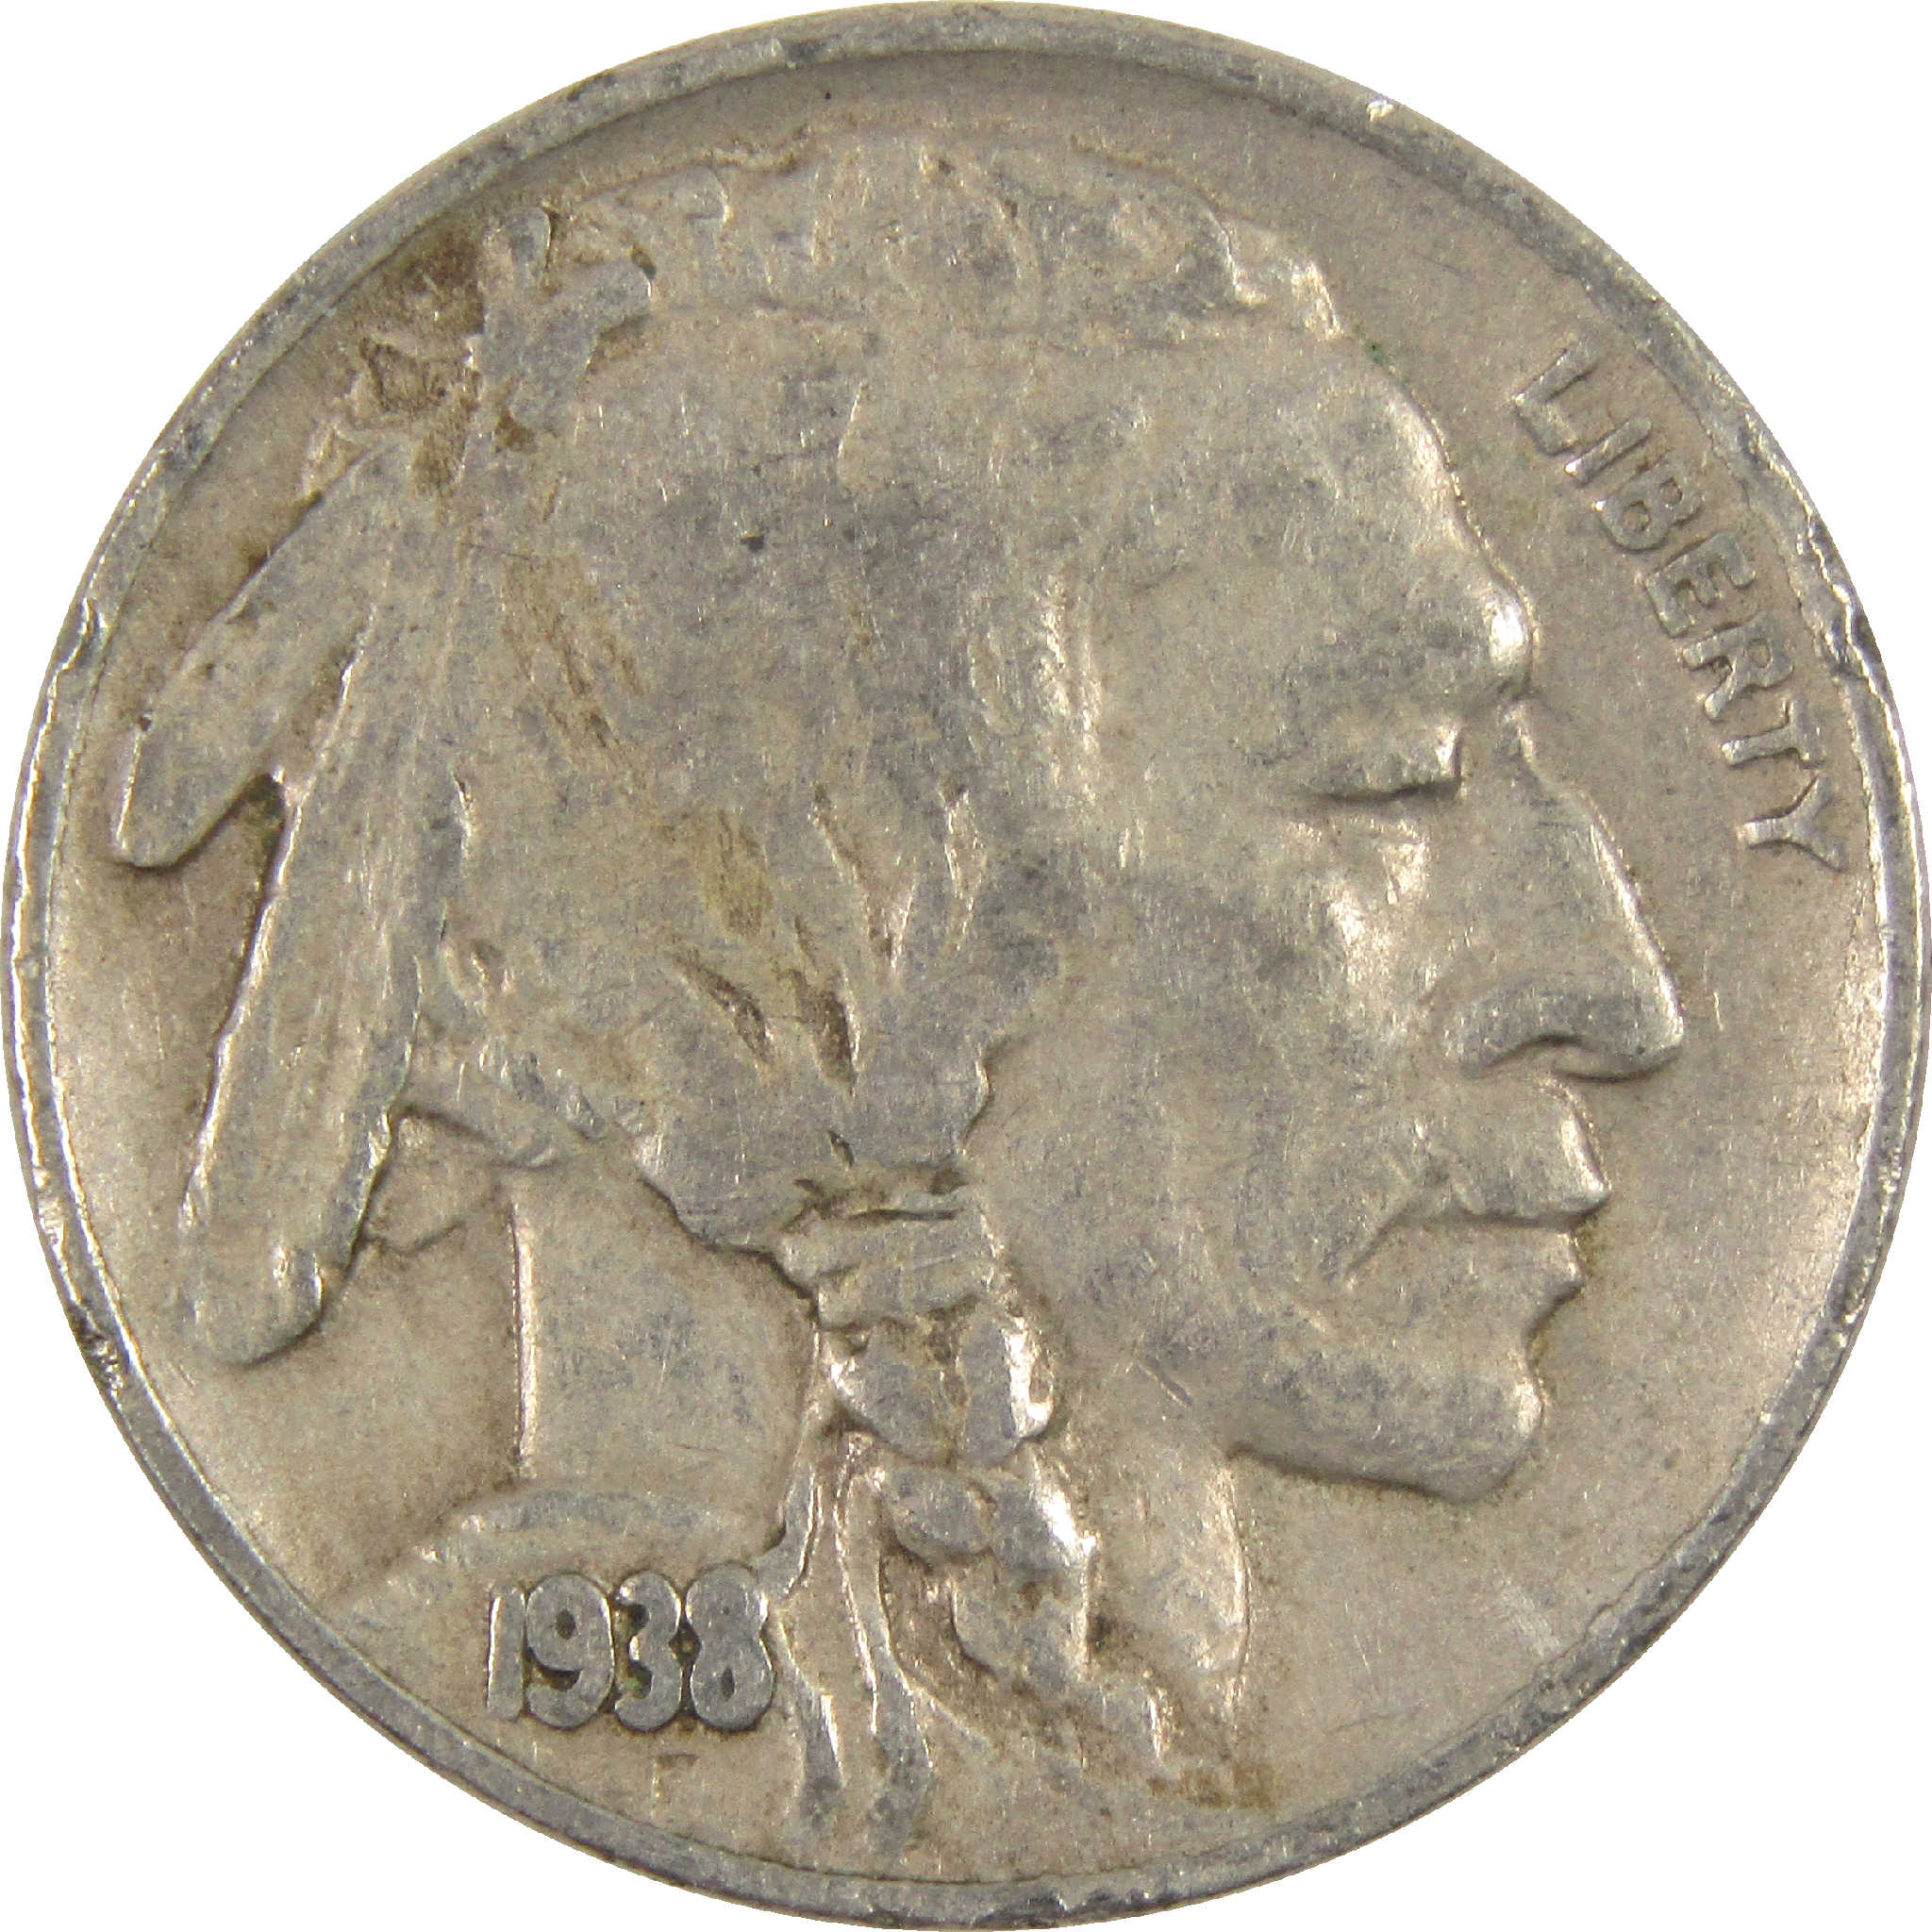 1938 D Indian Head Buffalo Nickel AG About Good 5c Coin